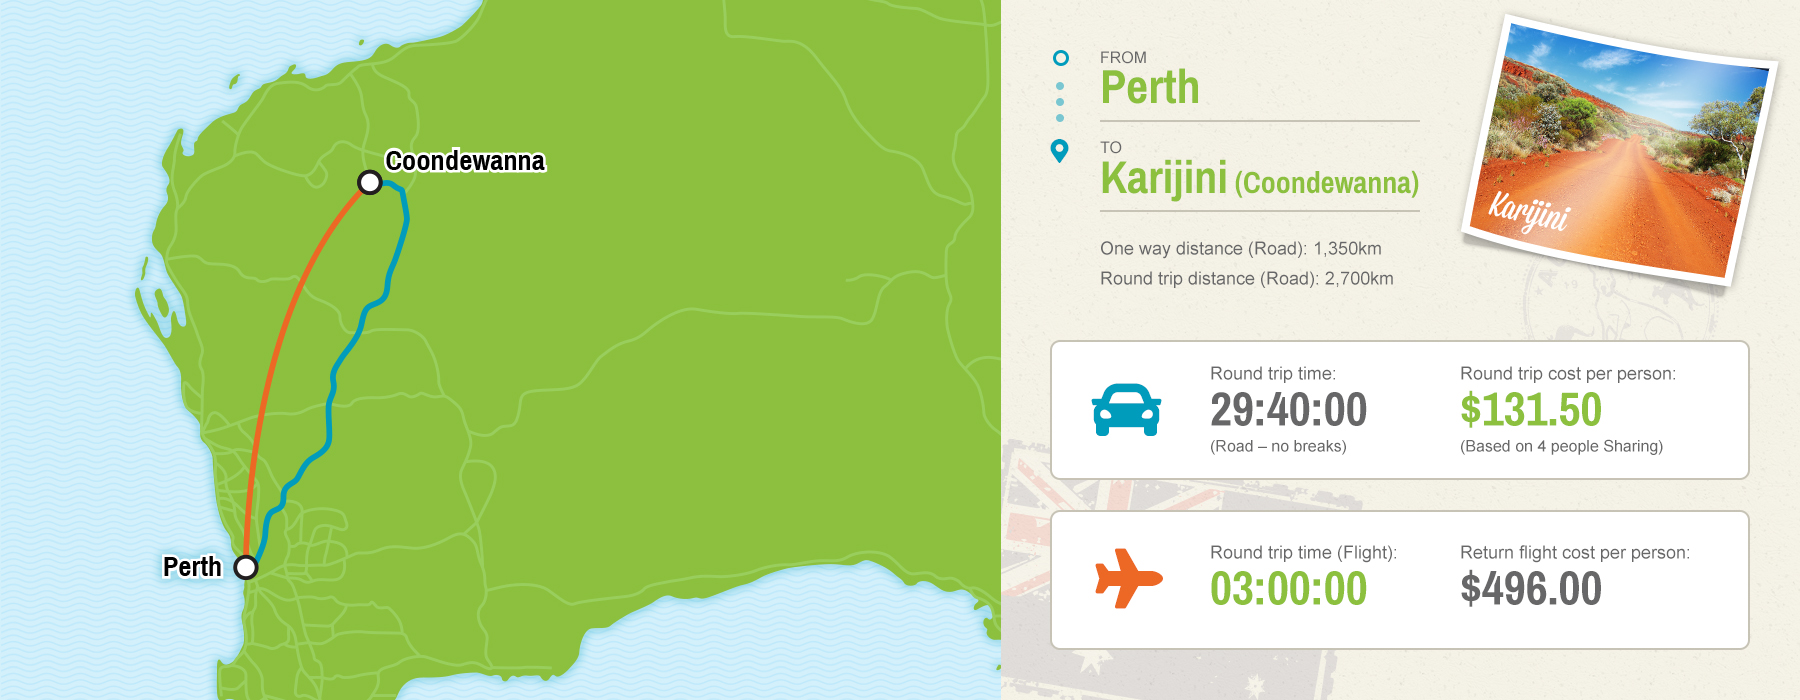 Perth to Karijini map showing driving vs flying